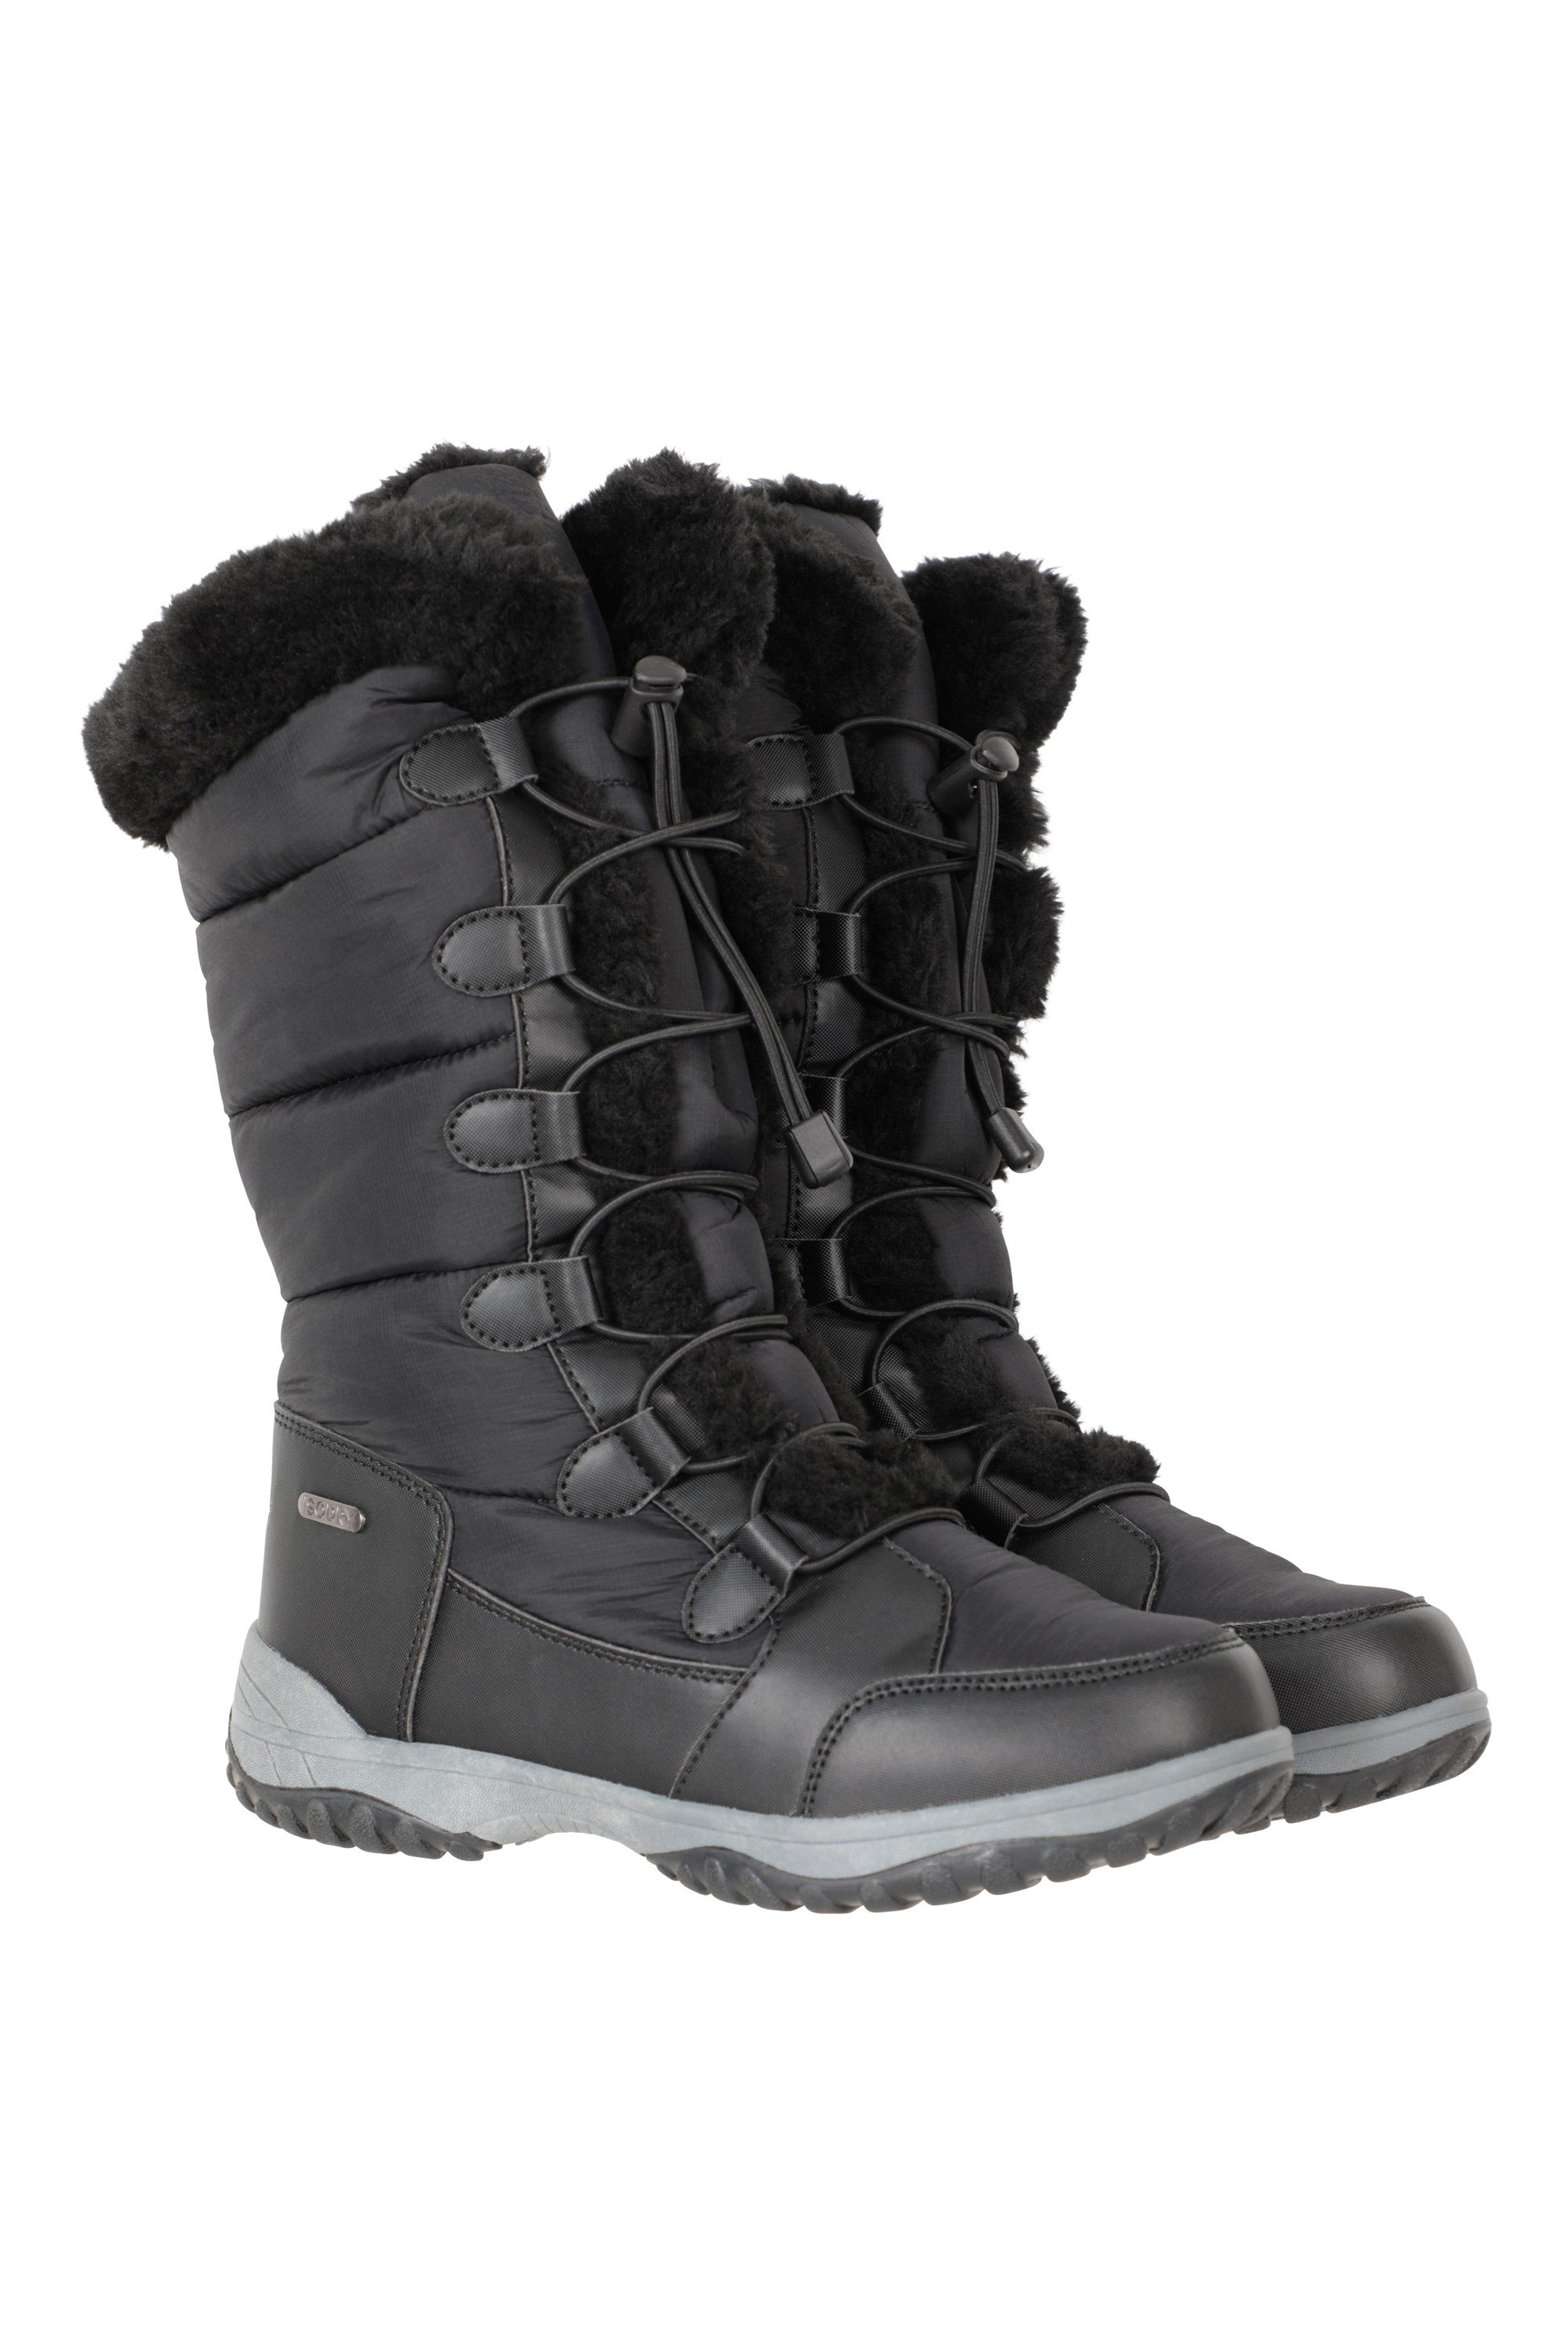 Snowflake Extreme Womens Adaptive Long Snow Boots - Black